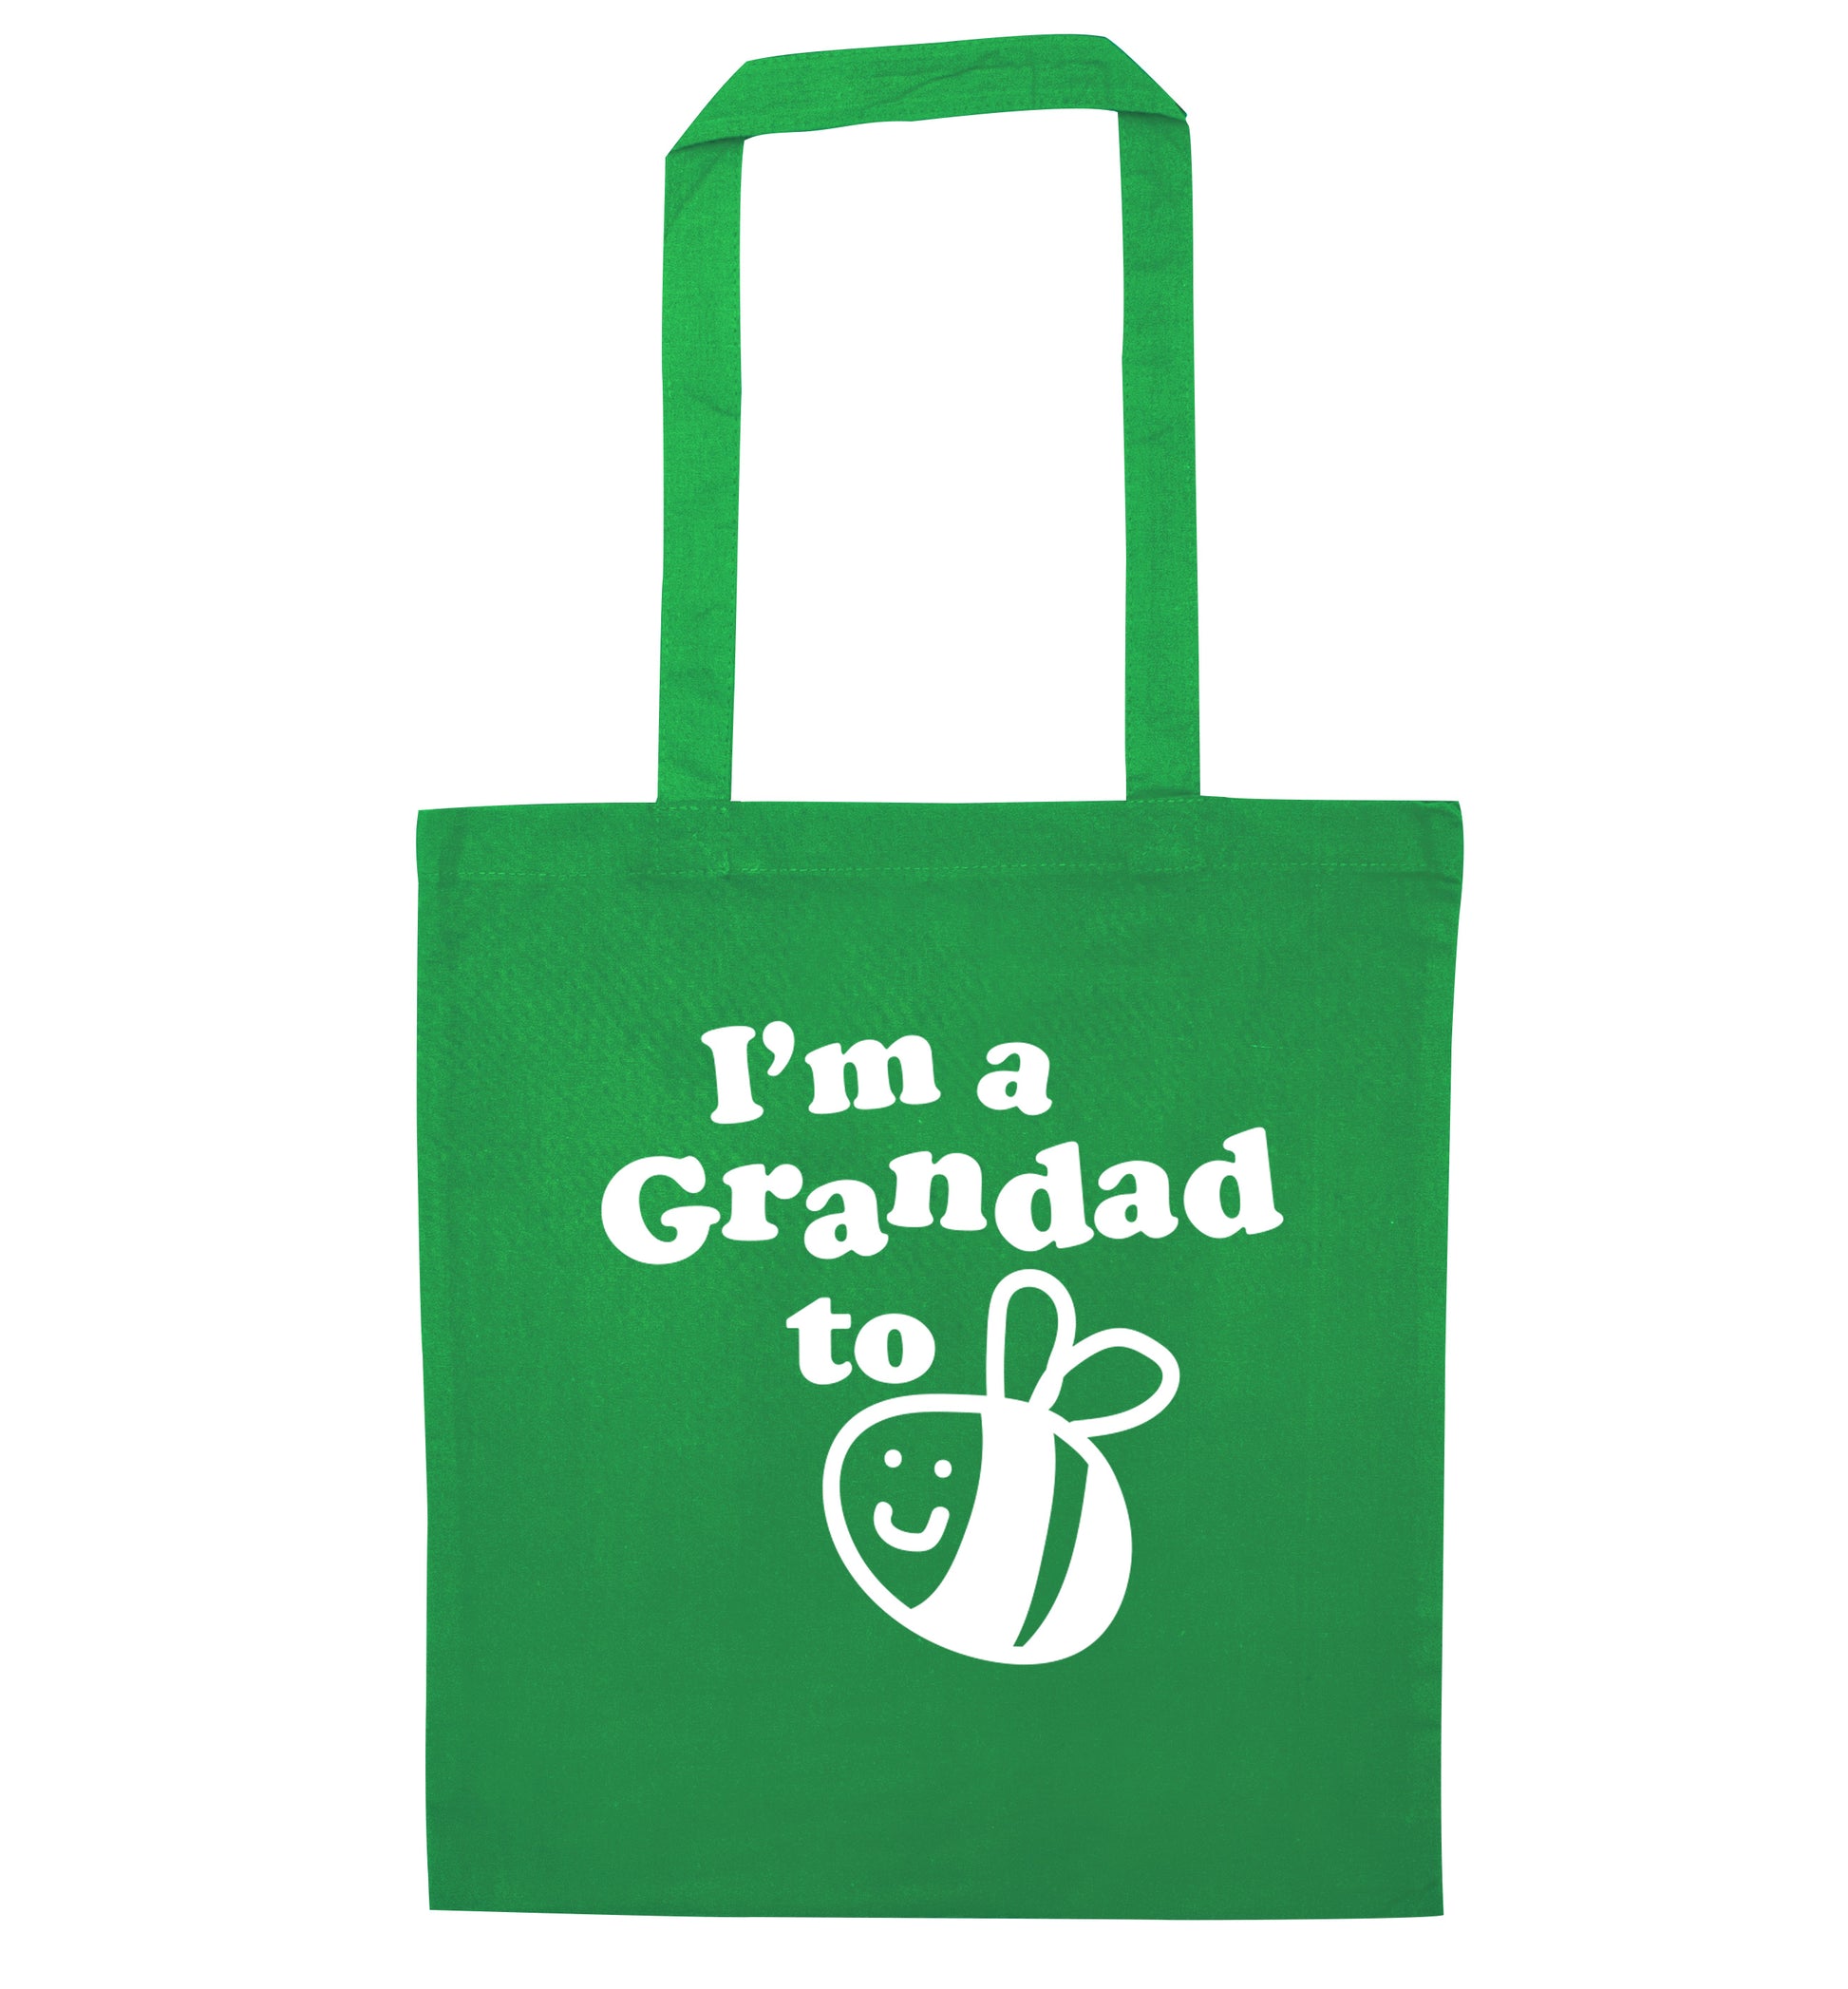 I'm a grandad to be green tote bag